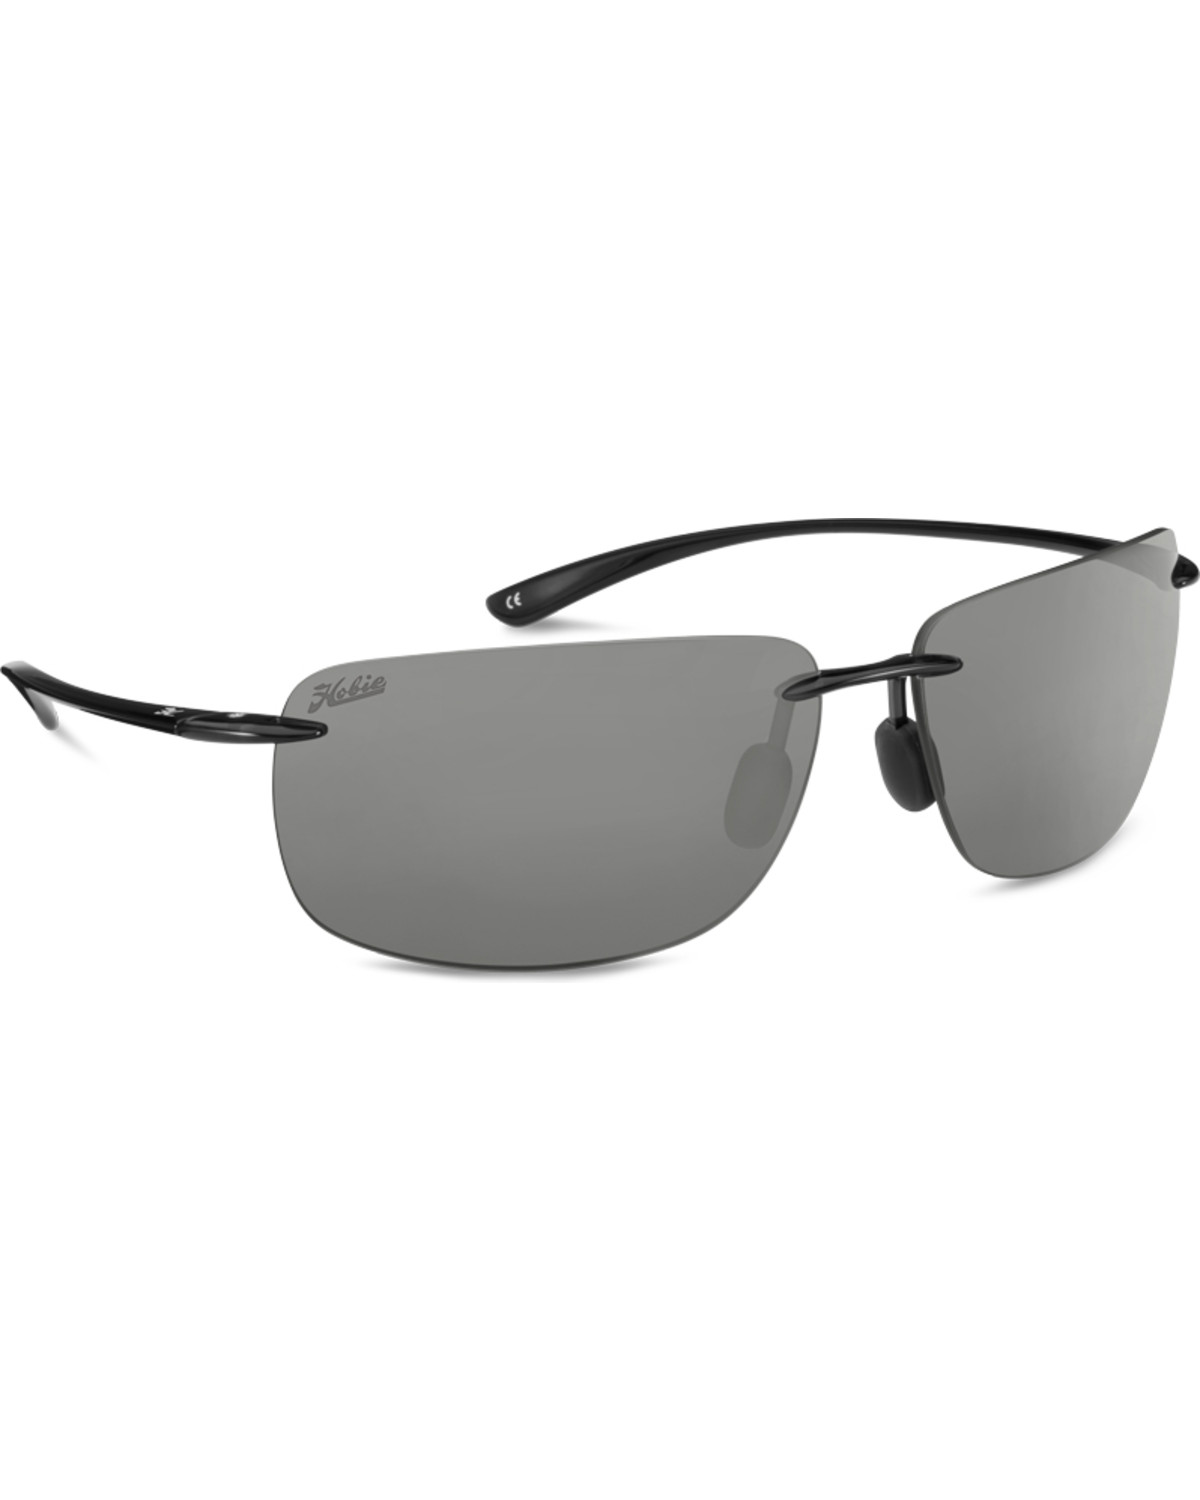 Hobie Men's Gray and Shiny Black Polarized Rips Sunglasses